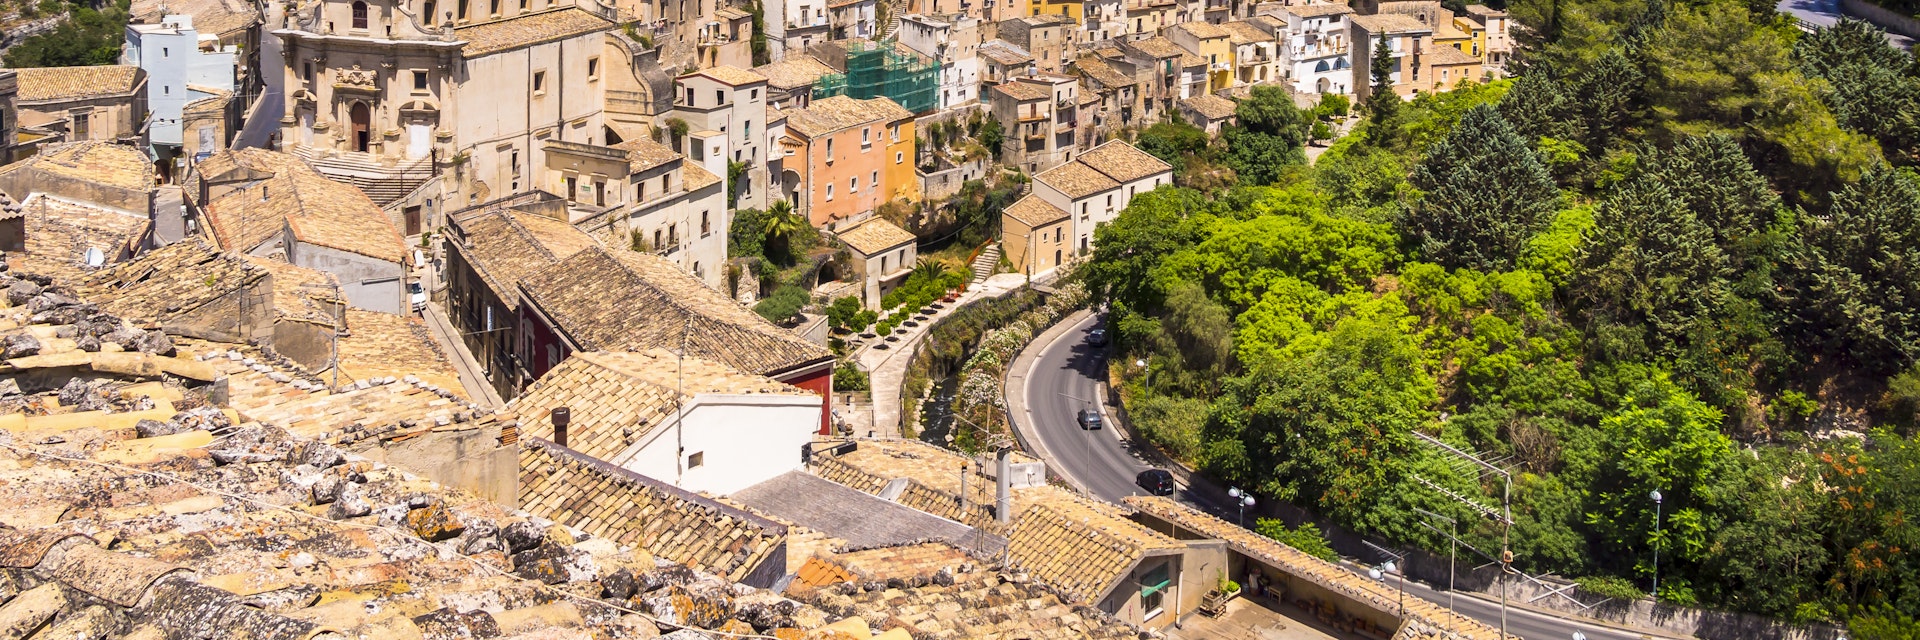 Italy, Sicily, Val di Noto, view over Ragusa Ibla